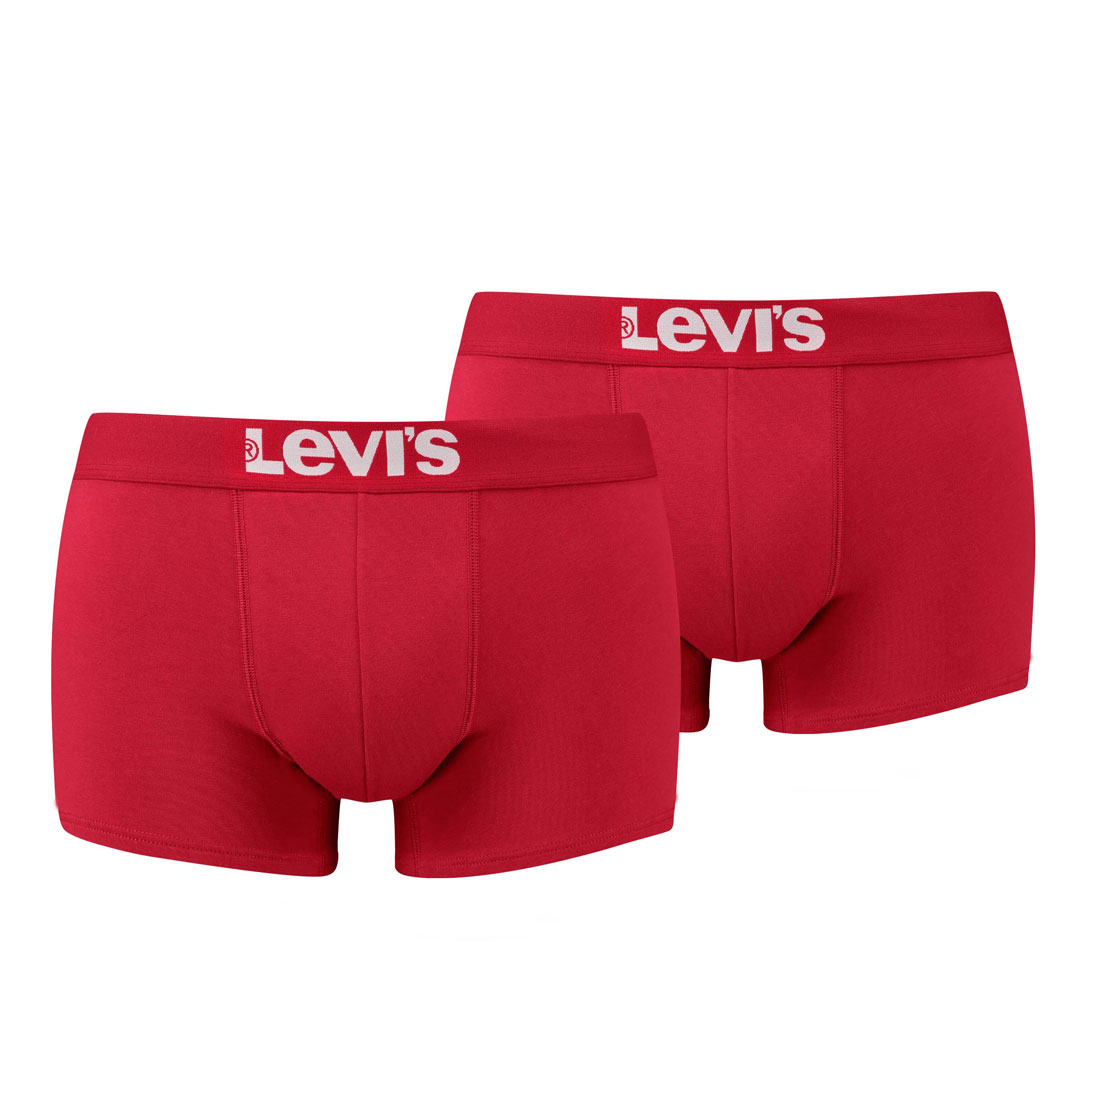 Levi's Herren Levis Men SOLID Basic Trunk 2P Boxershorts, Rot (Chili Pepper 186), X-Large (Herstellergröße: 040) (2er Pack)